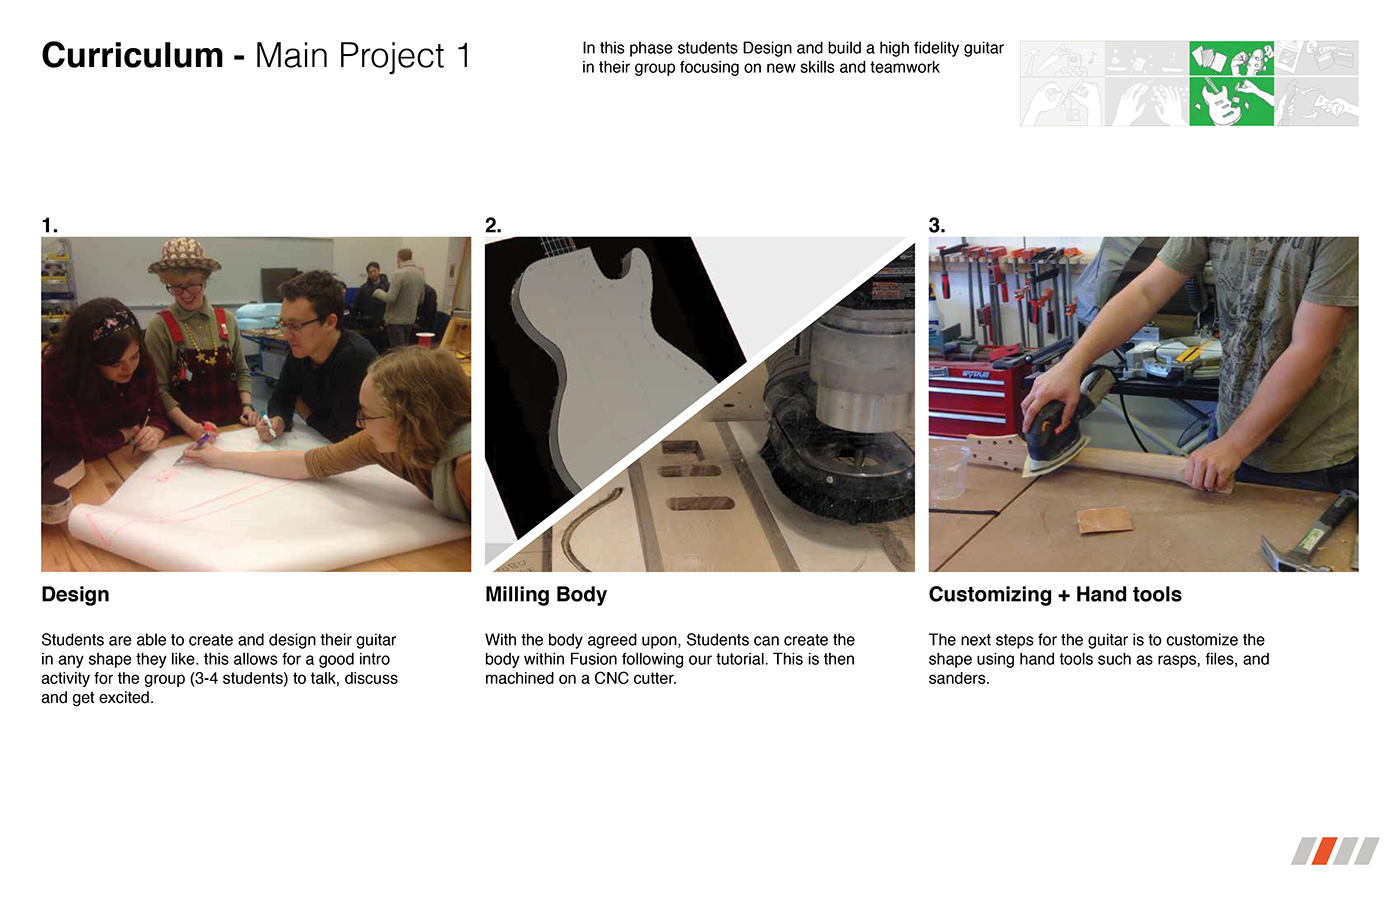 portfolio design massart process senior Capstone augmented jeep guitar reality